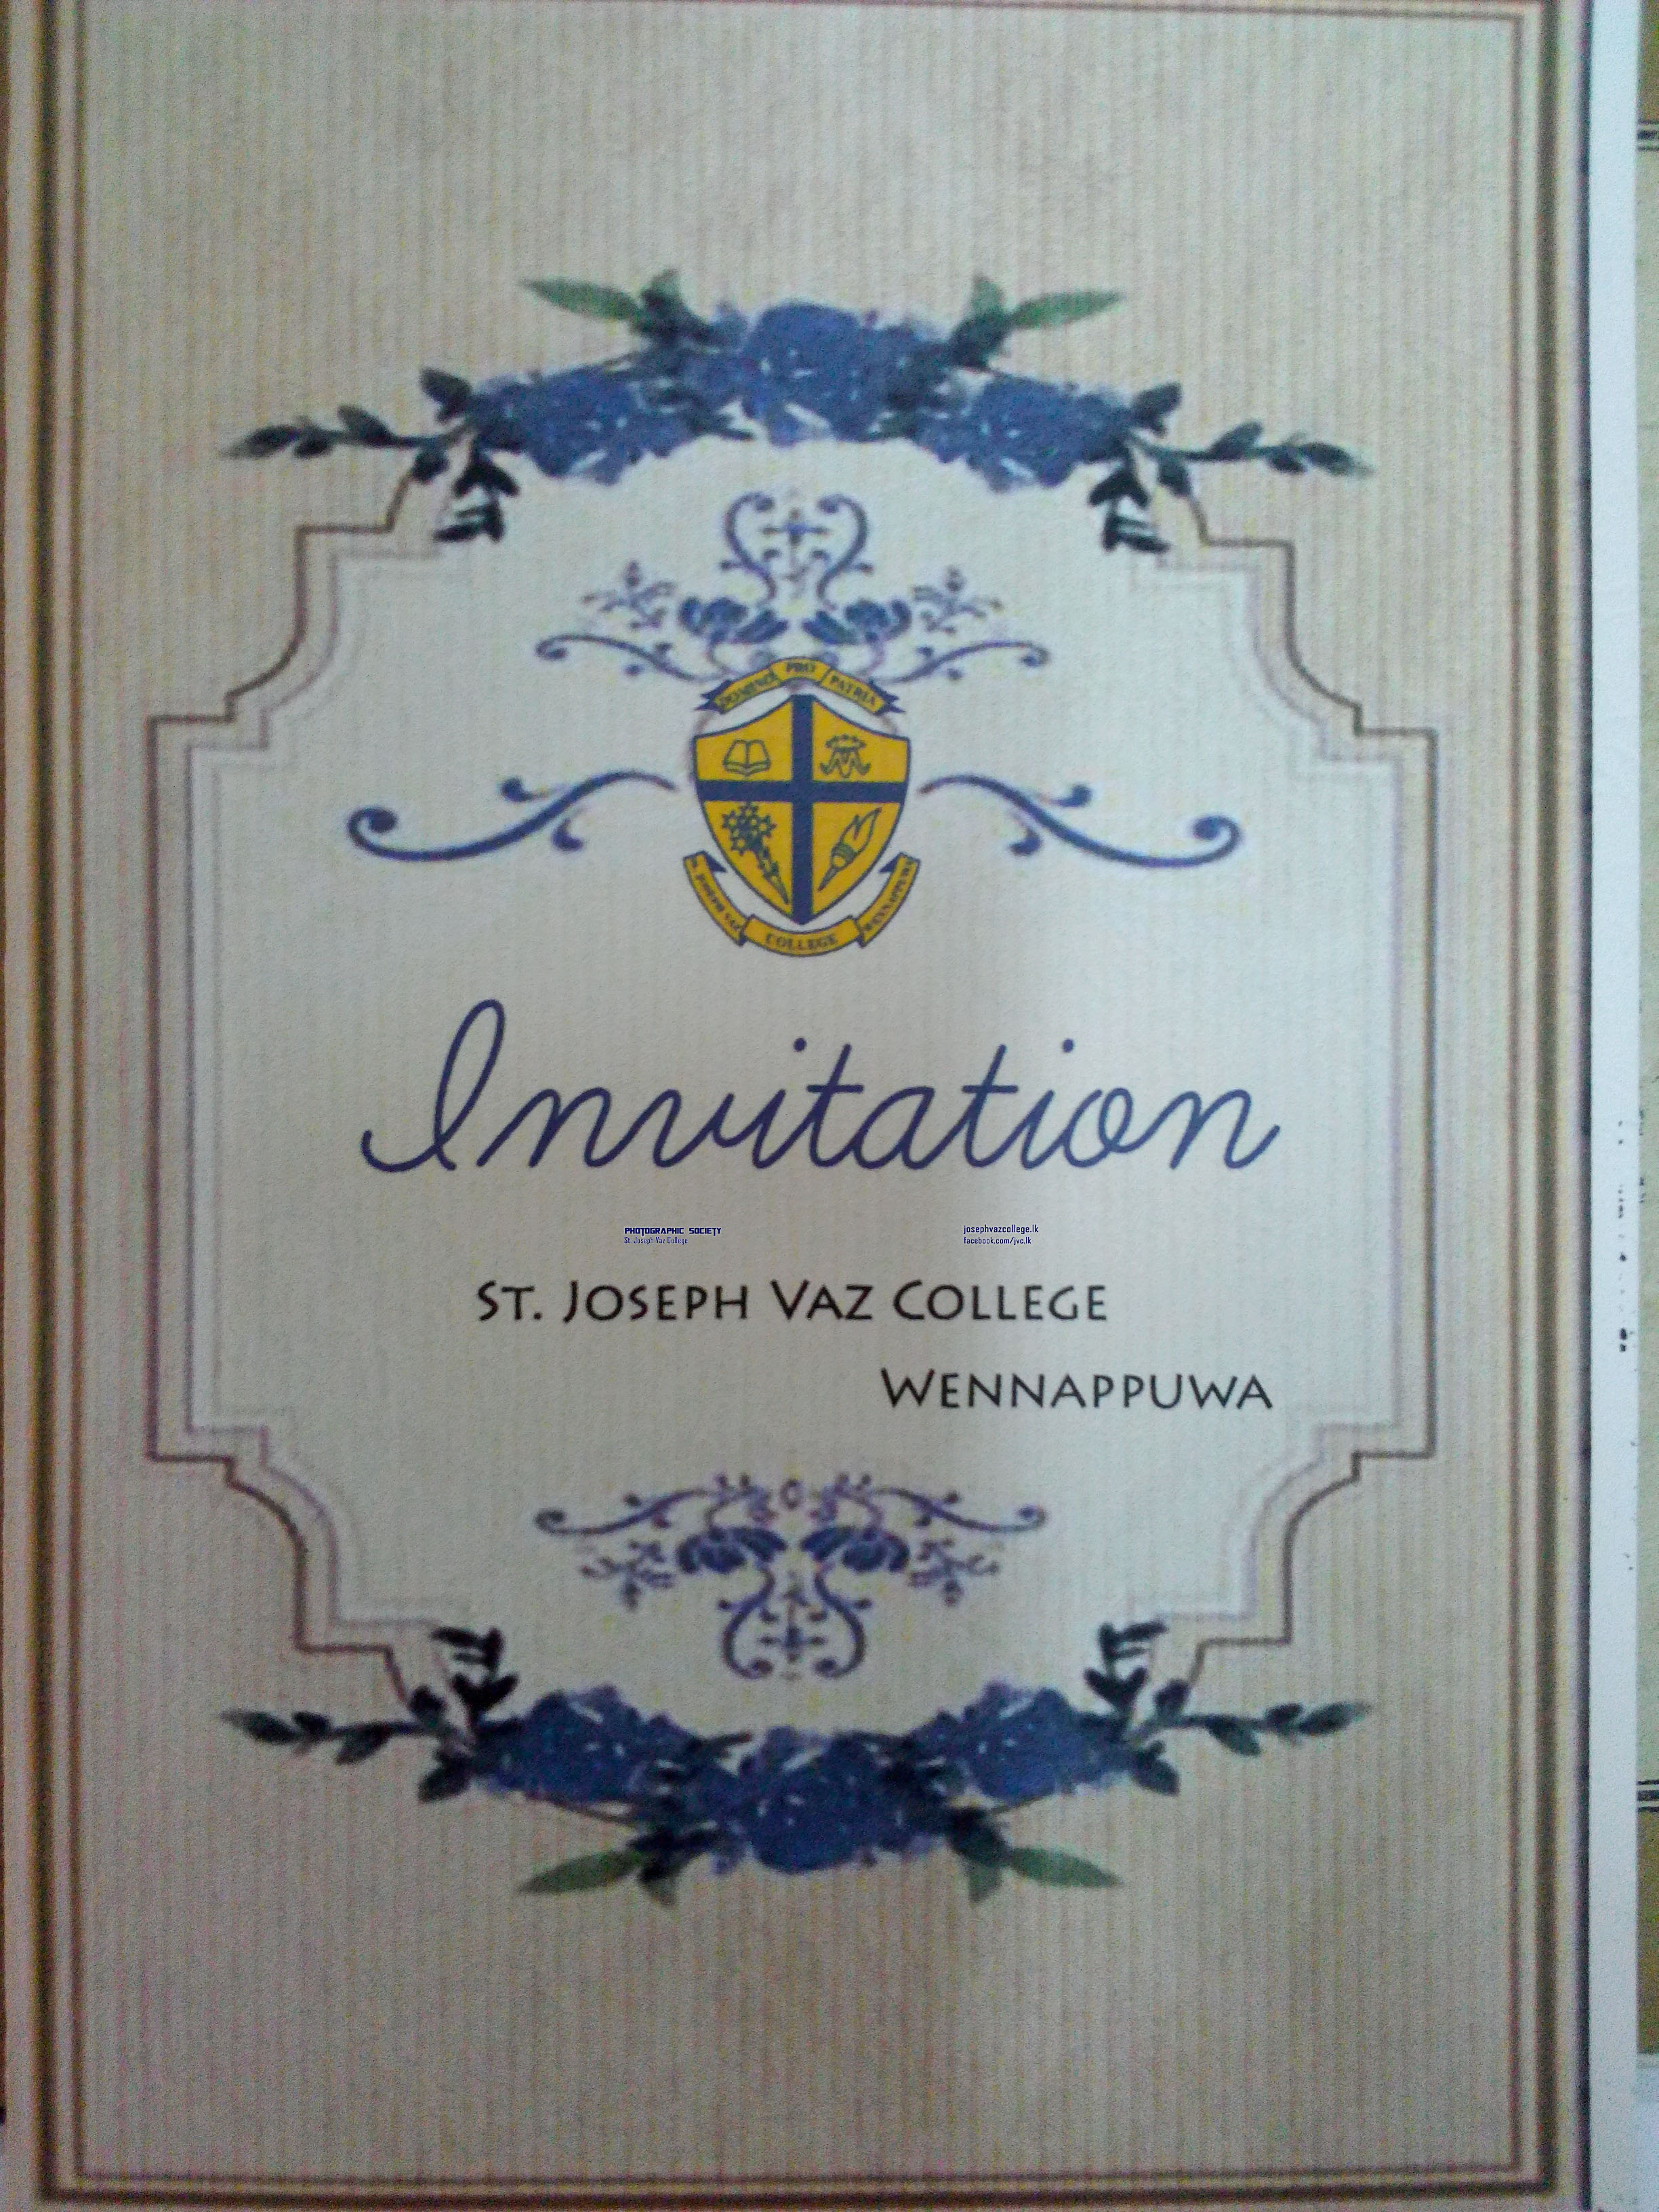 Prize Giving 2018 - Invitaion - St. Joseph Vaz College - Wennappuwa - Sri Lanka